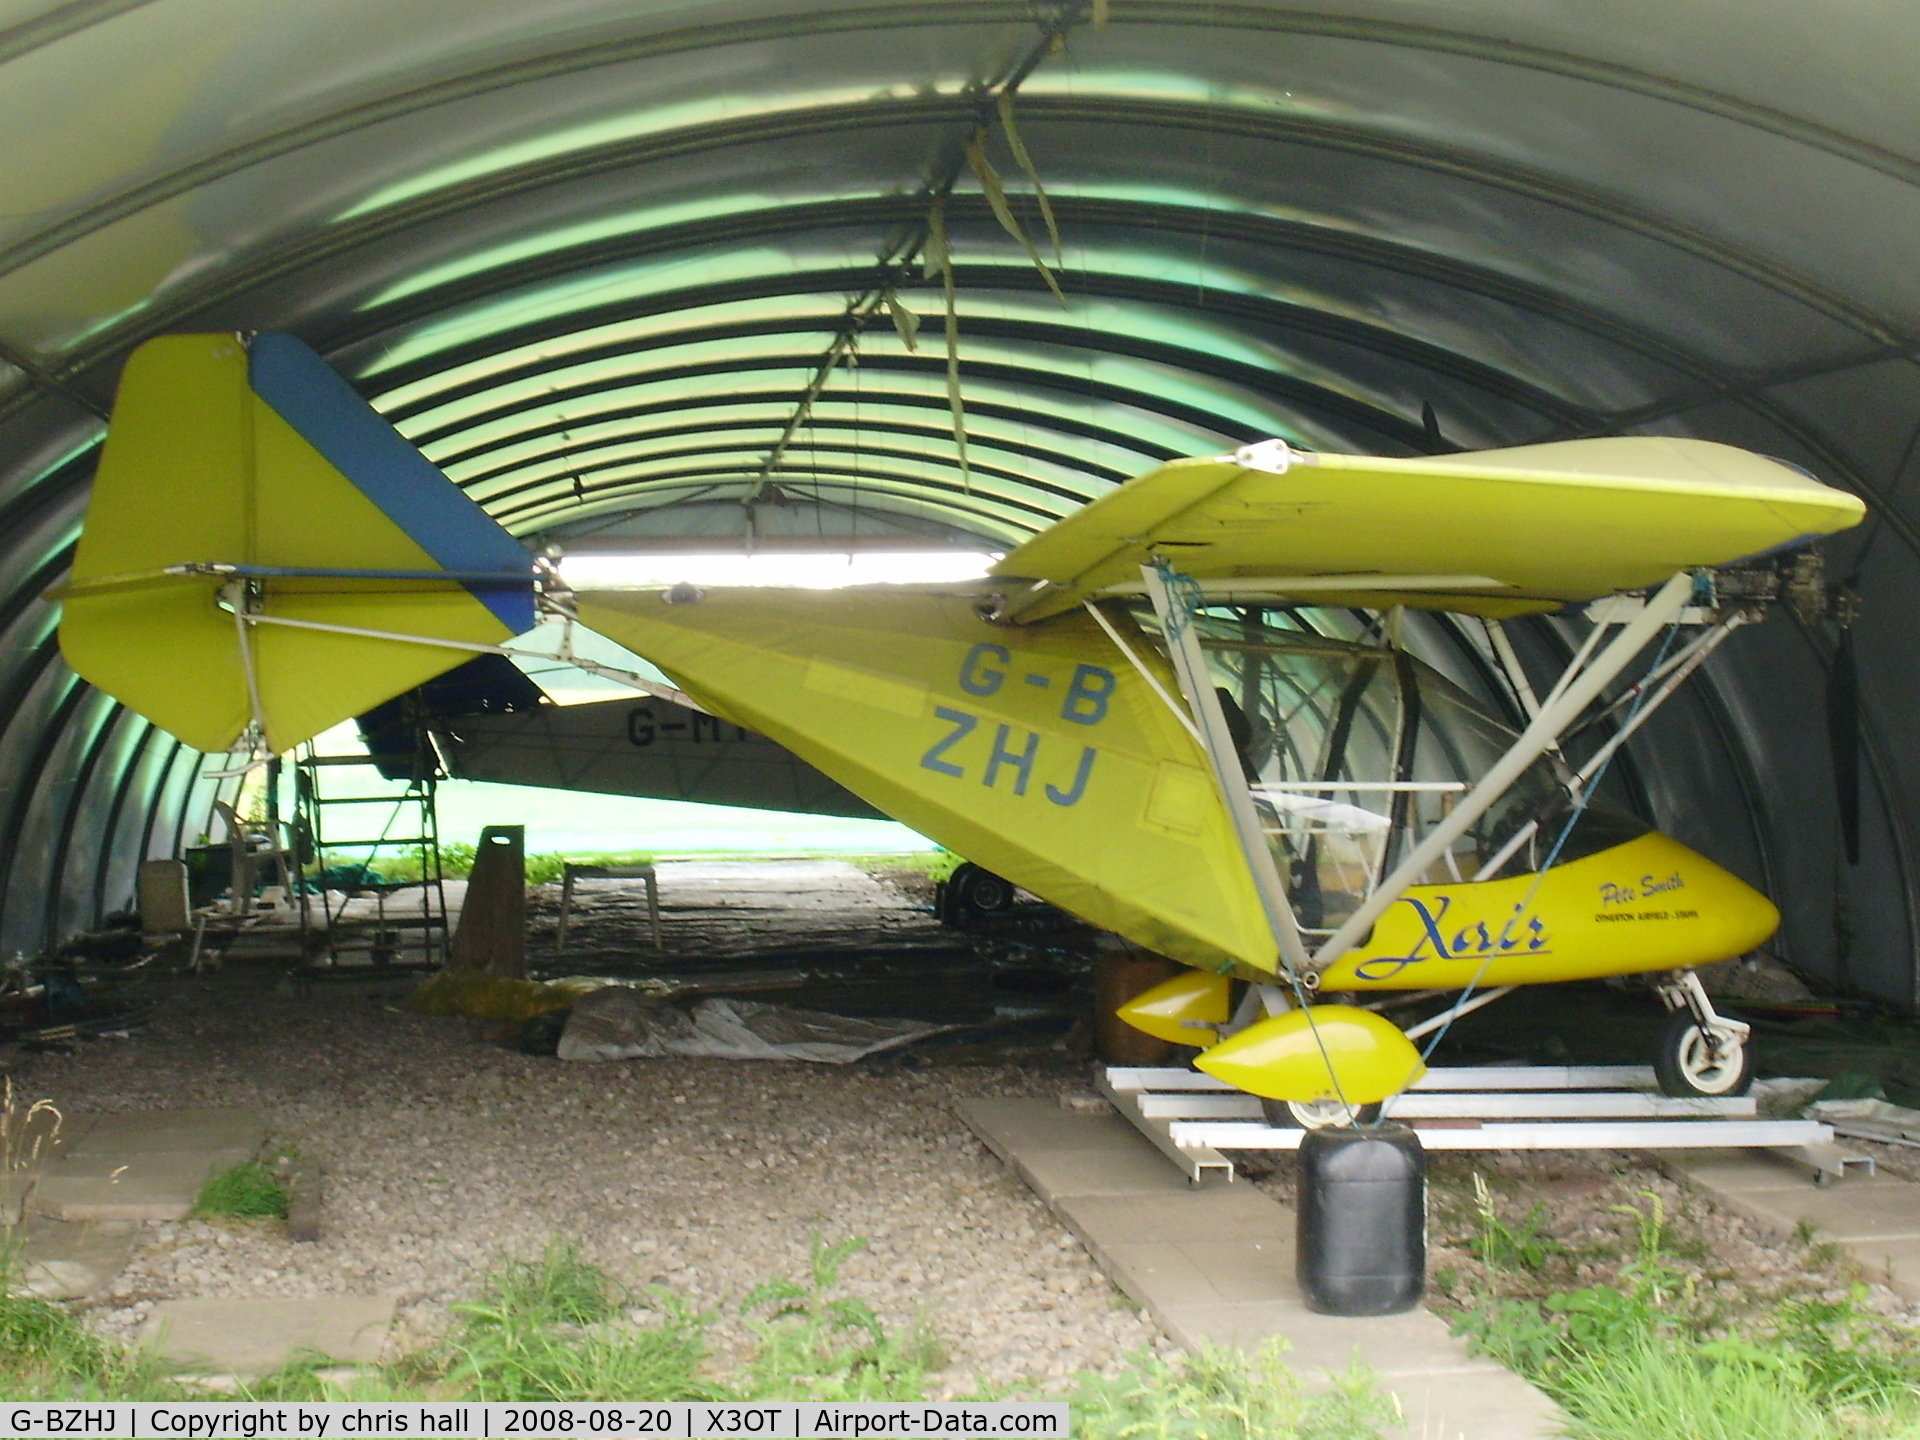 G-BZHJ, 2000 X'Air 582(7) C/N BMAA/HB/126, Otherton Microlight Airfield